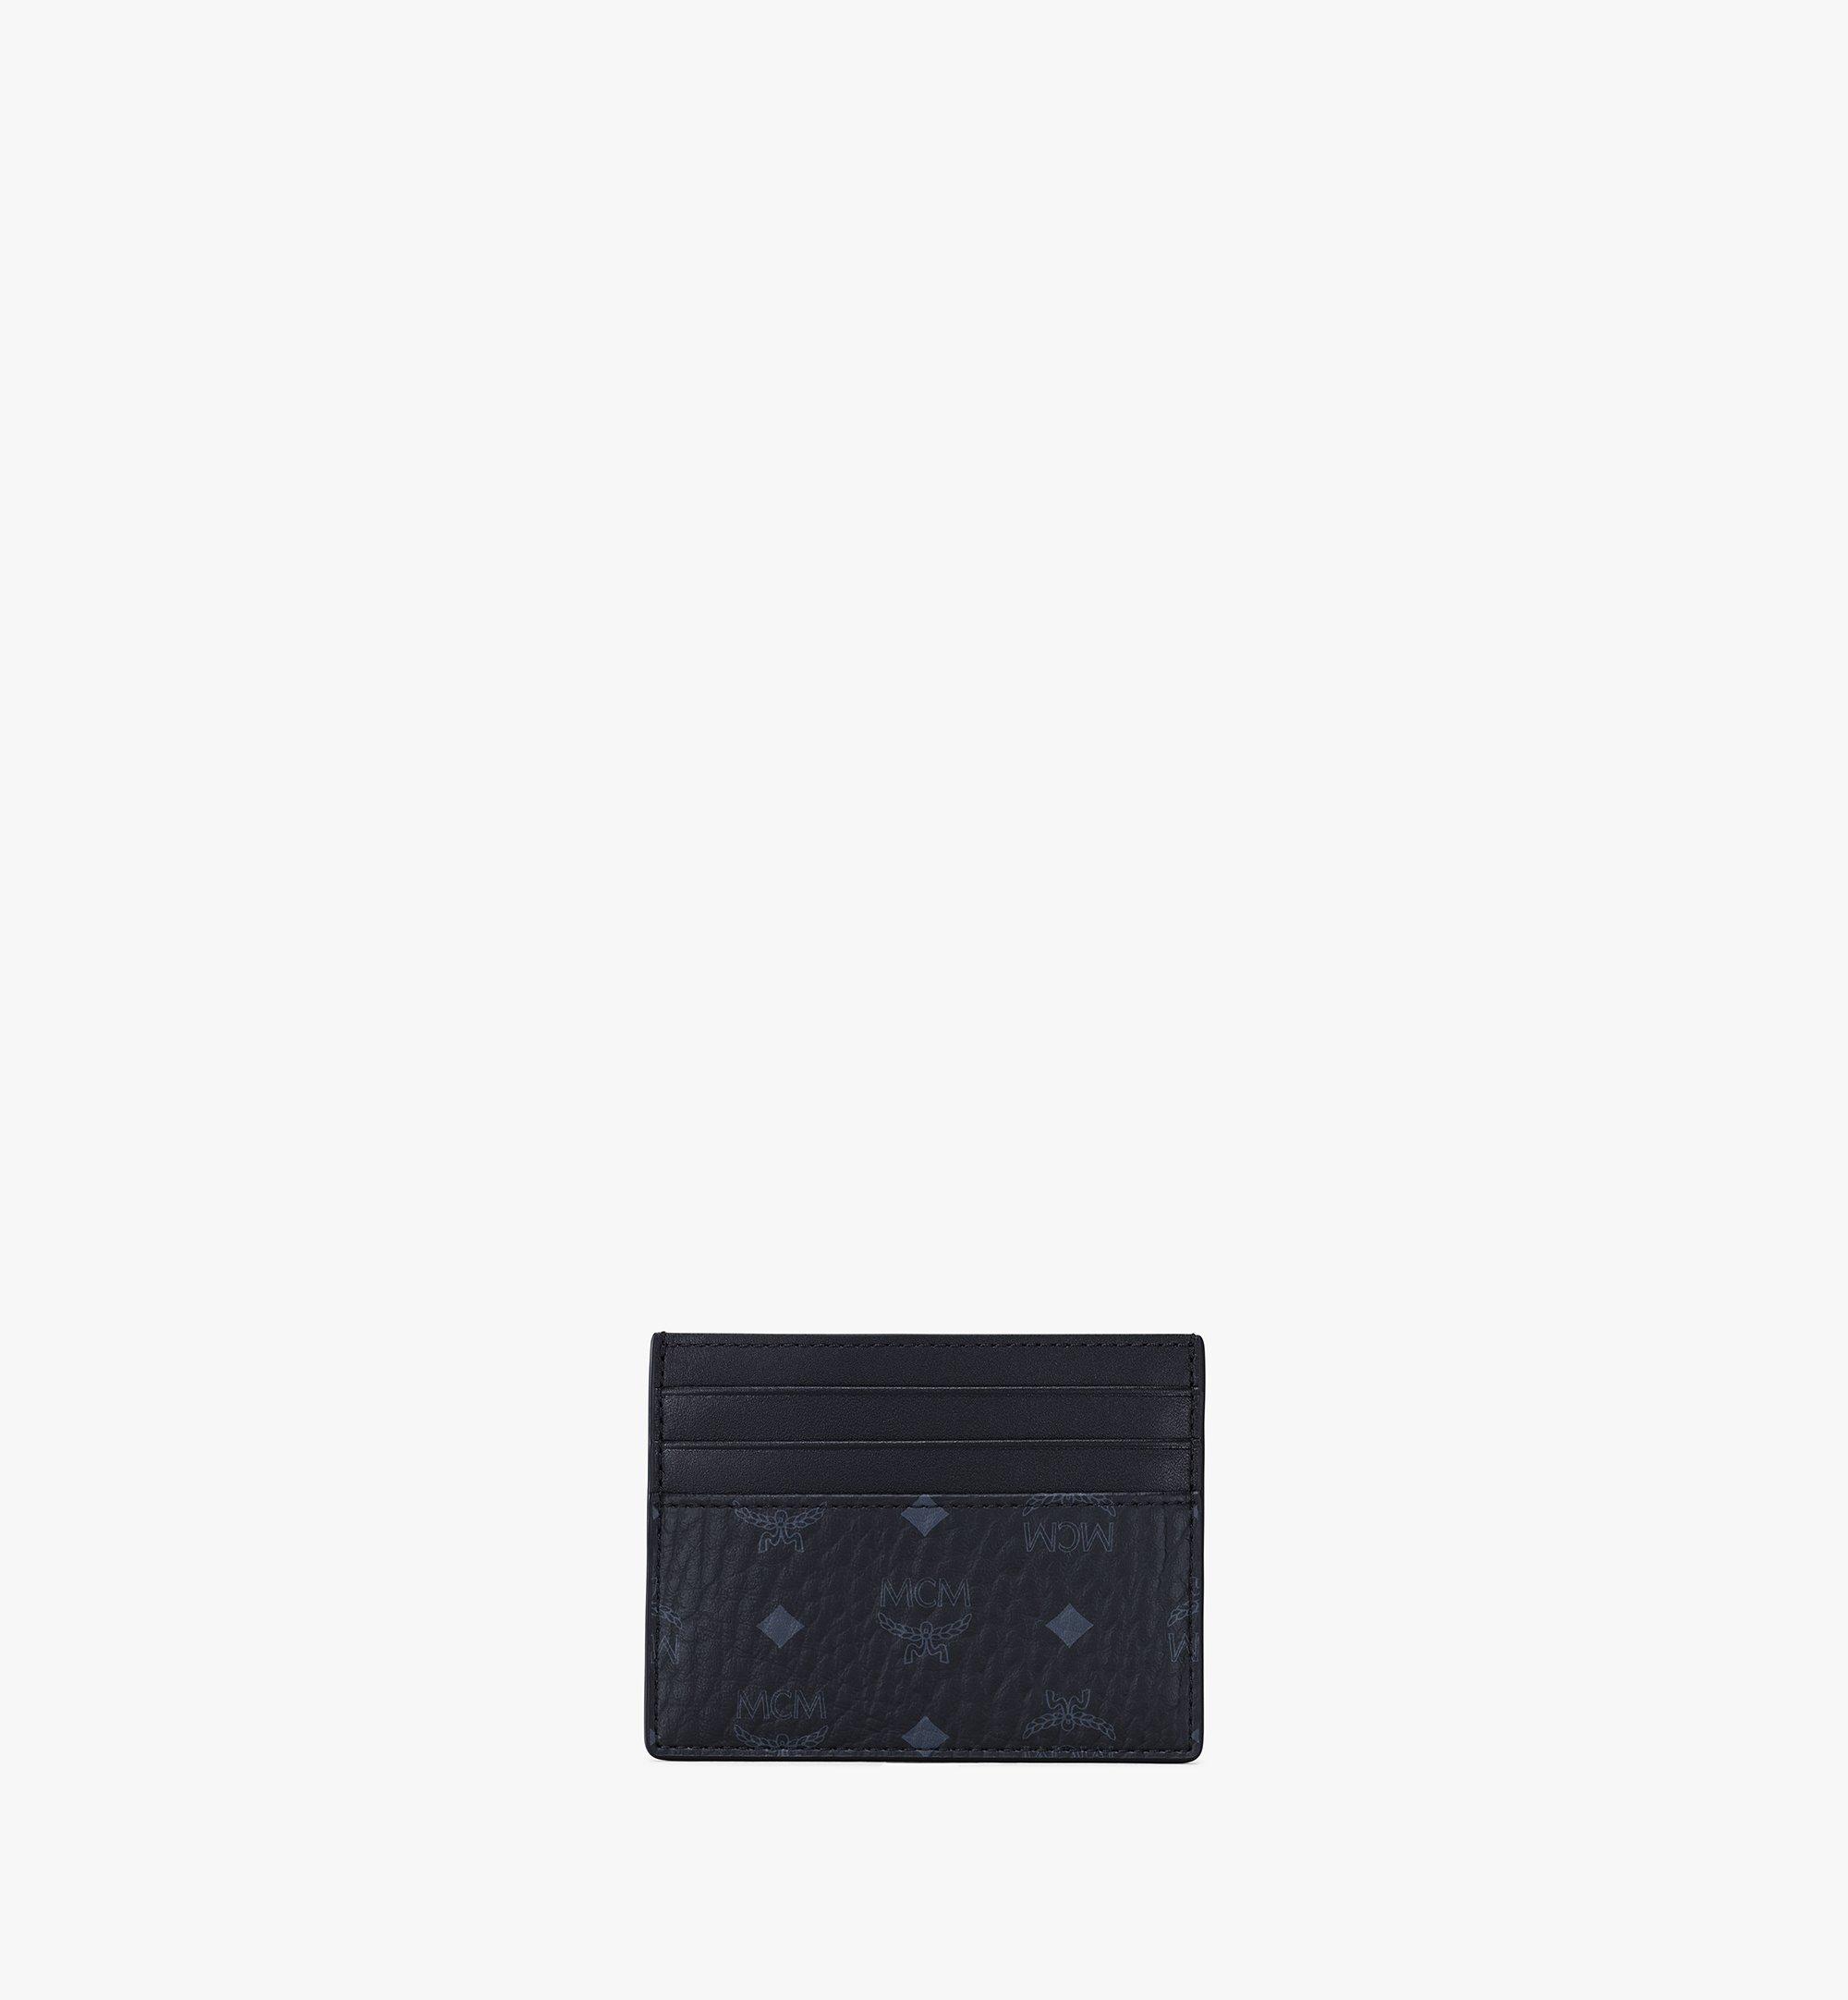 Mini マネー クリップ カードケース - ヴィセトス オリジナル ブラック 